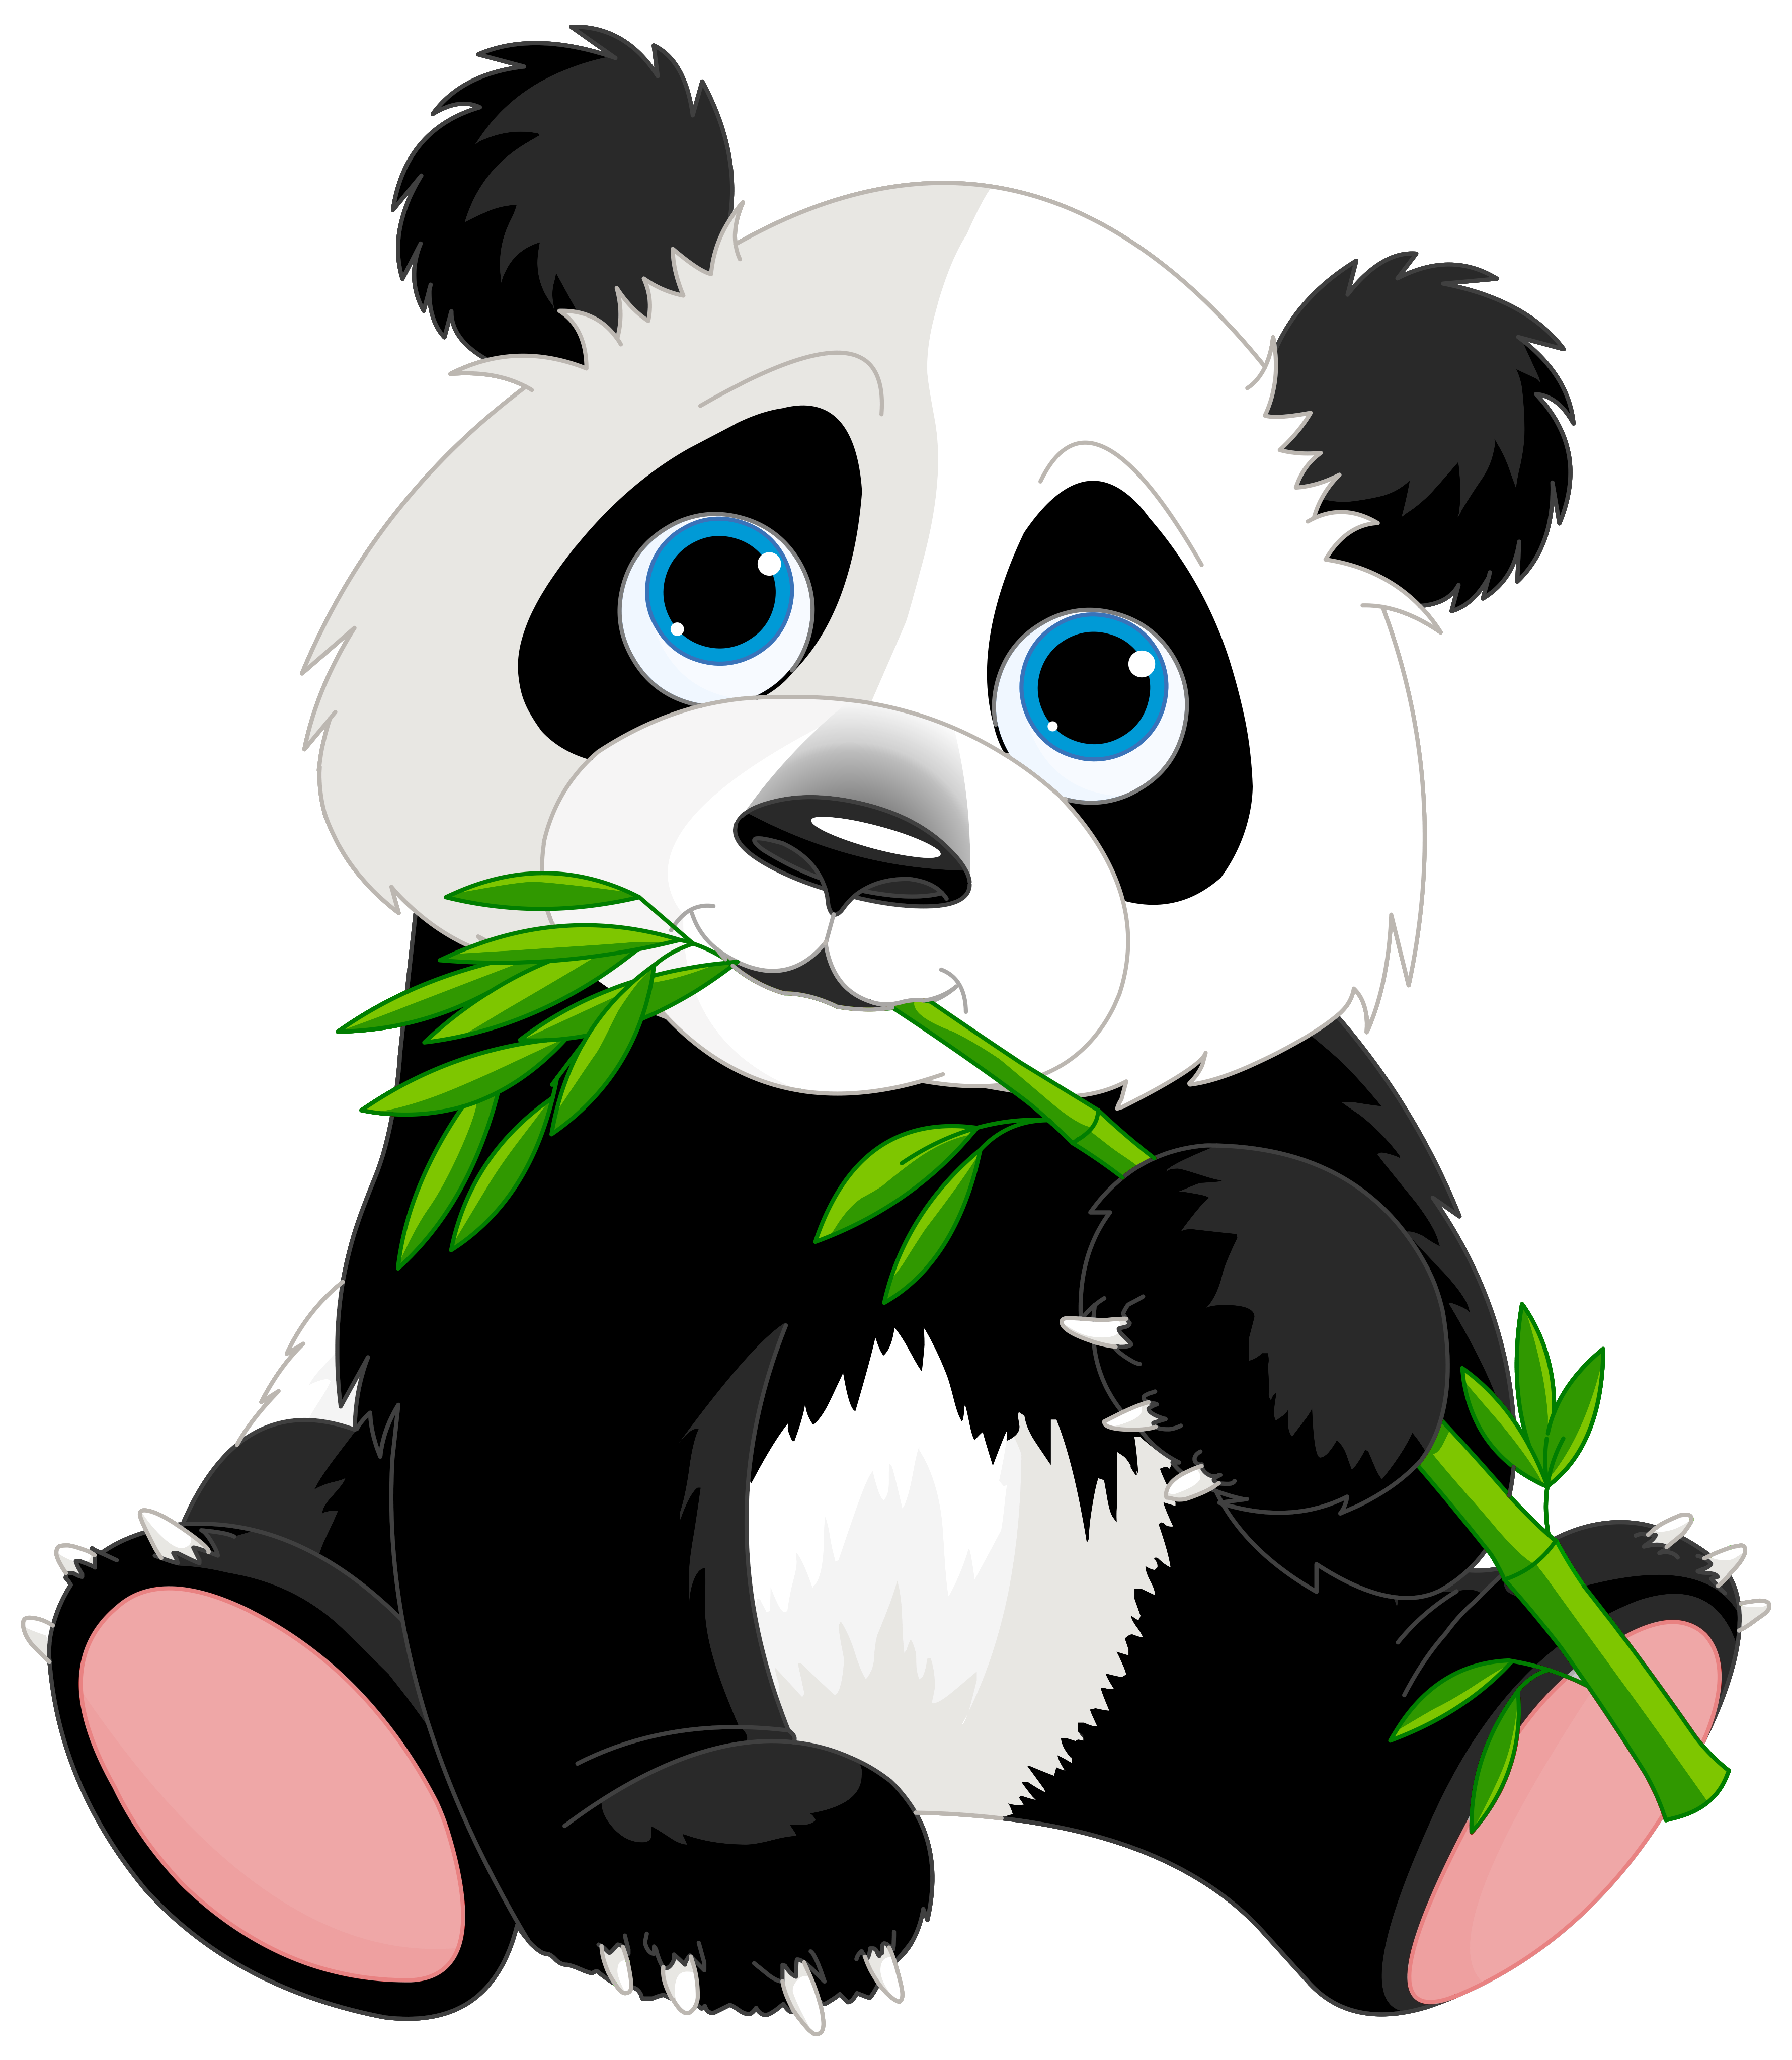 Cute panda cartoon clipart image gallery yopriceville.